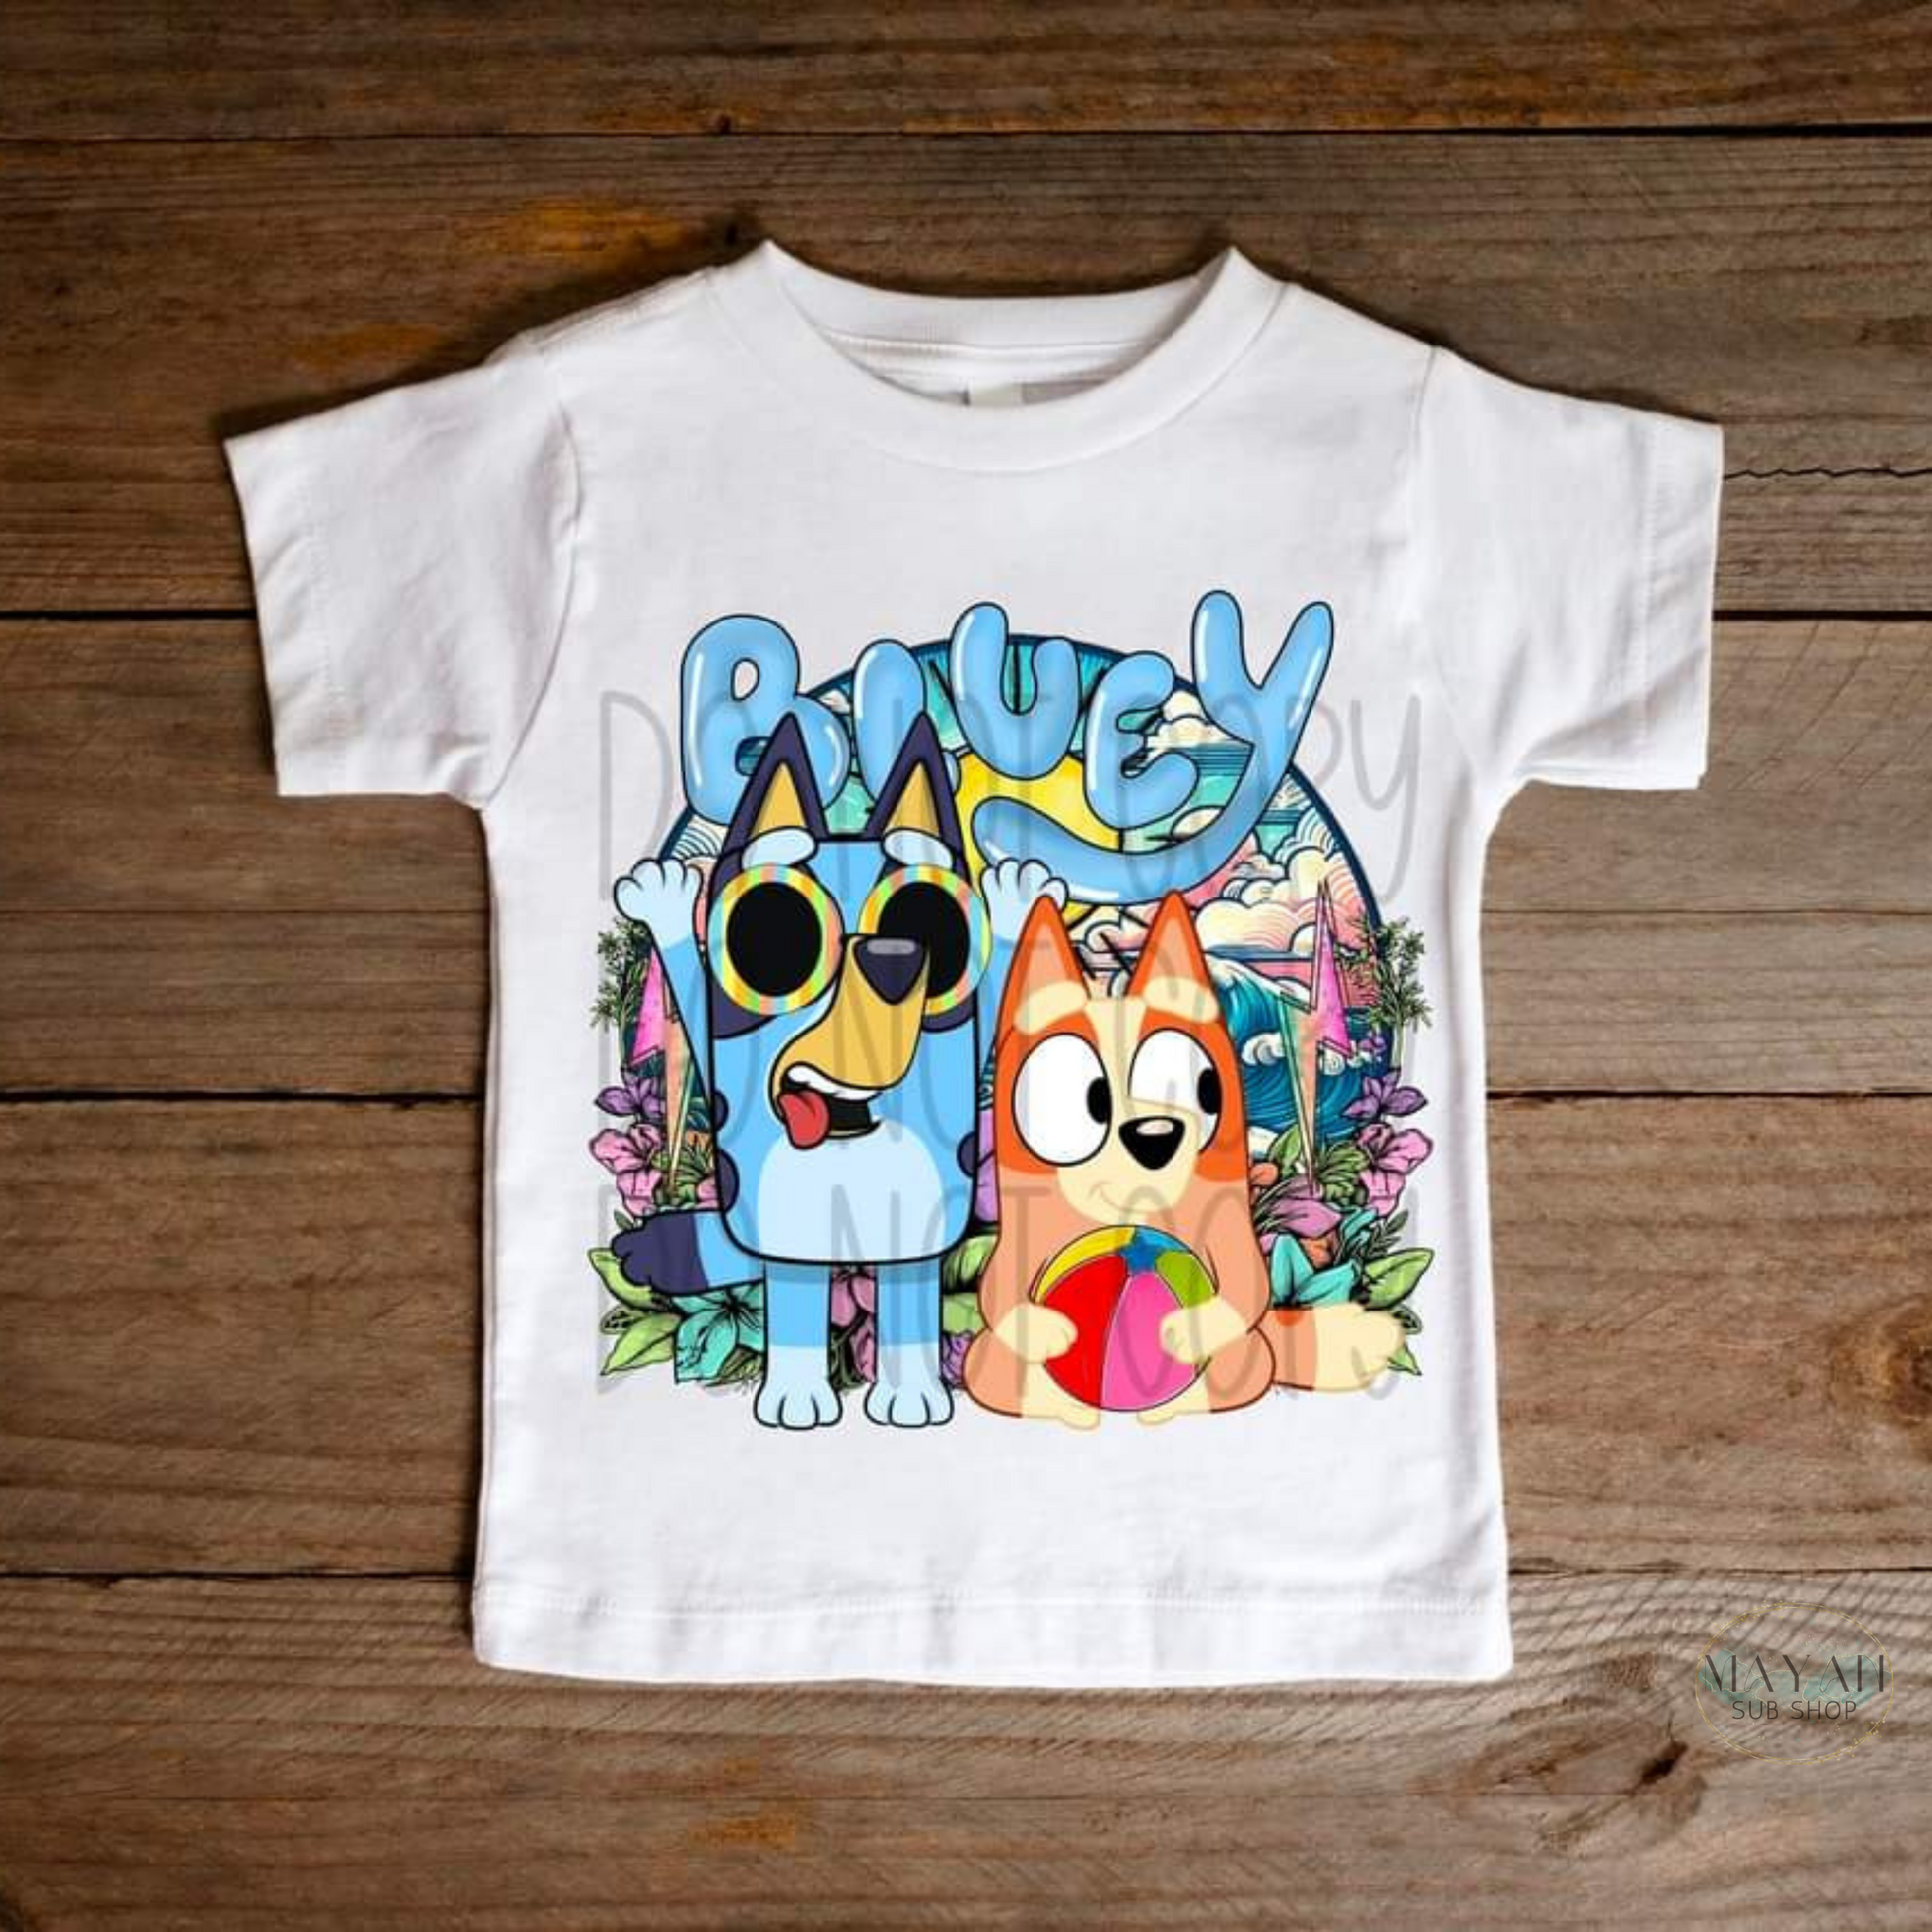 Cartoon character summer kids shirt. -Mayan Sub Shop